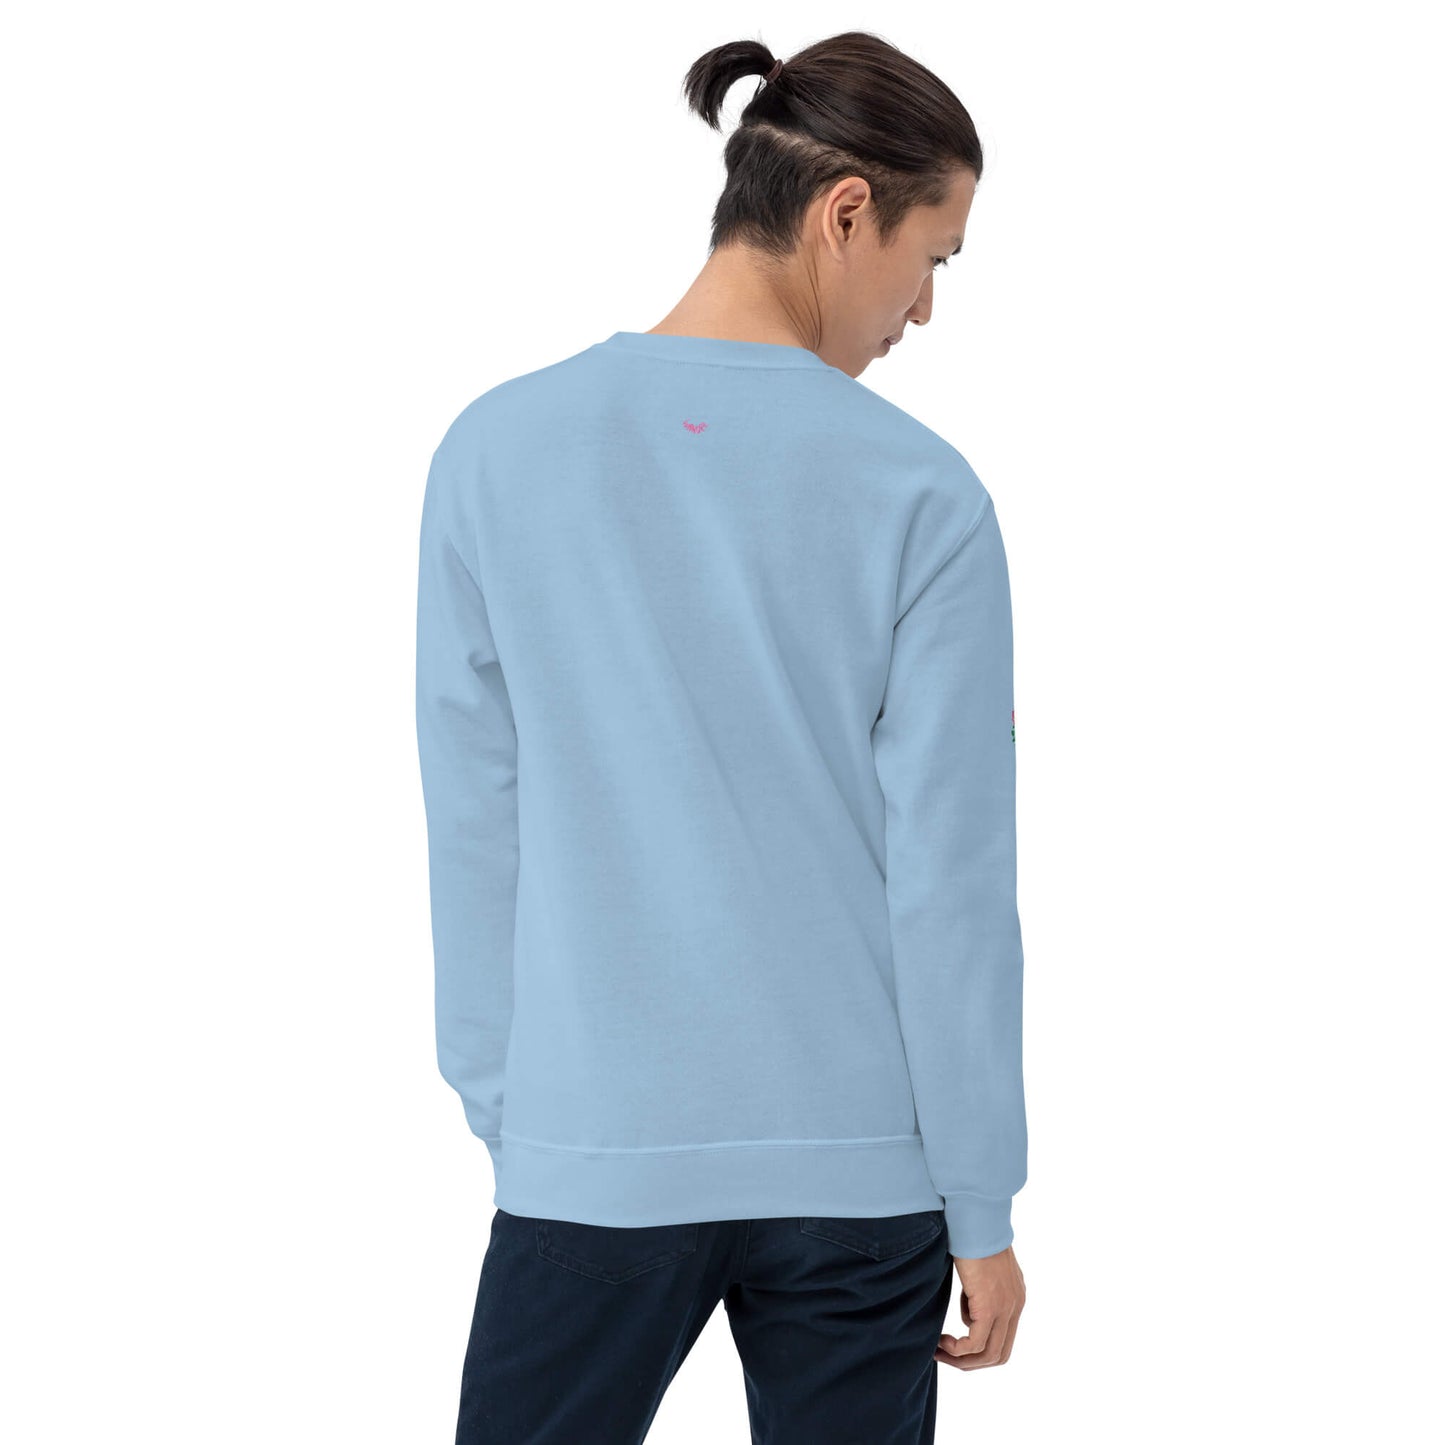 Sweatshirt Blue i Will Wander